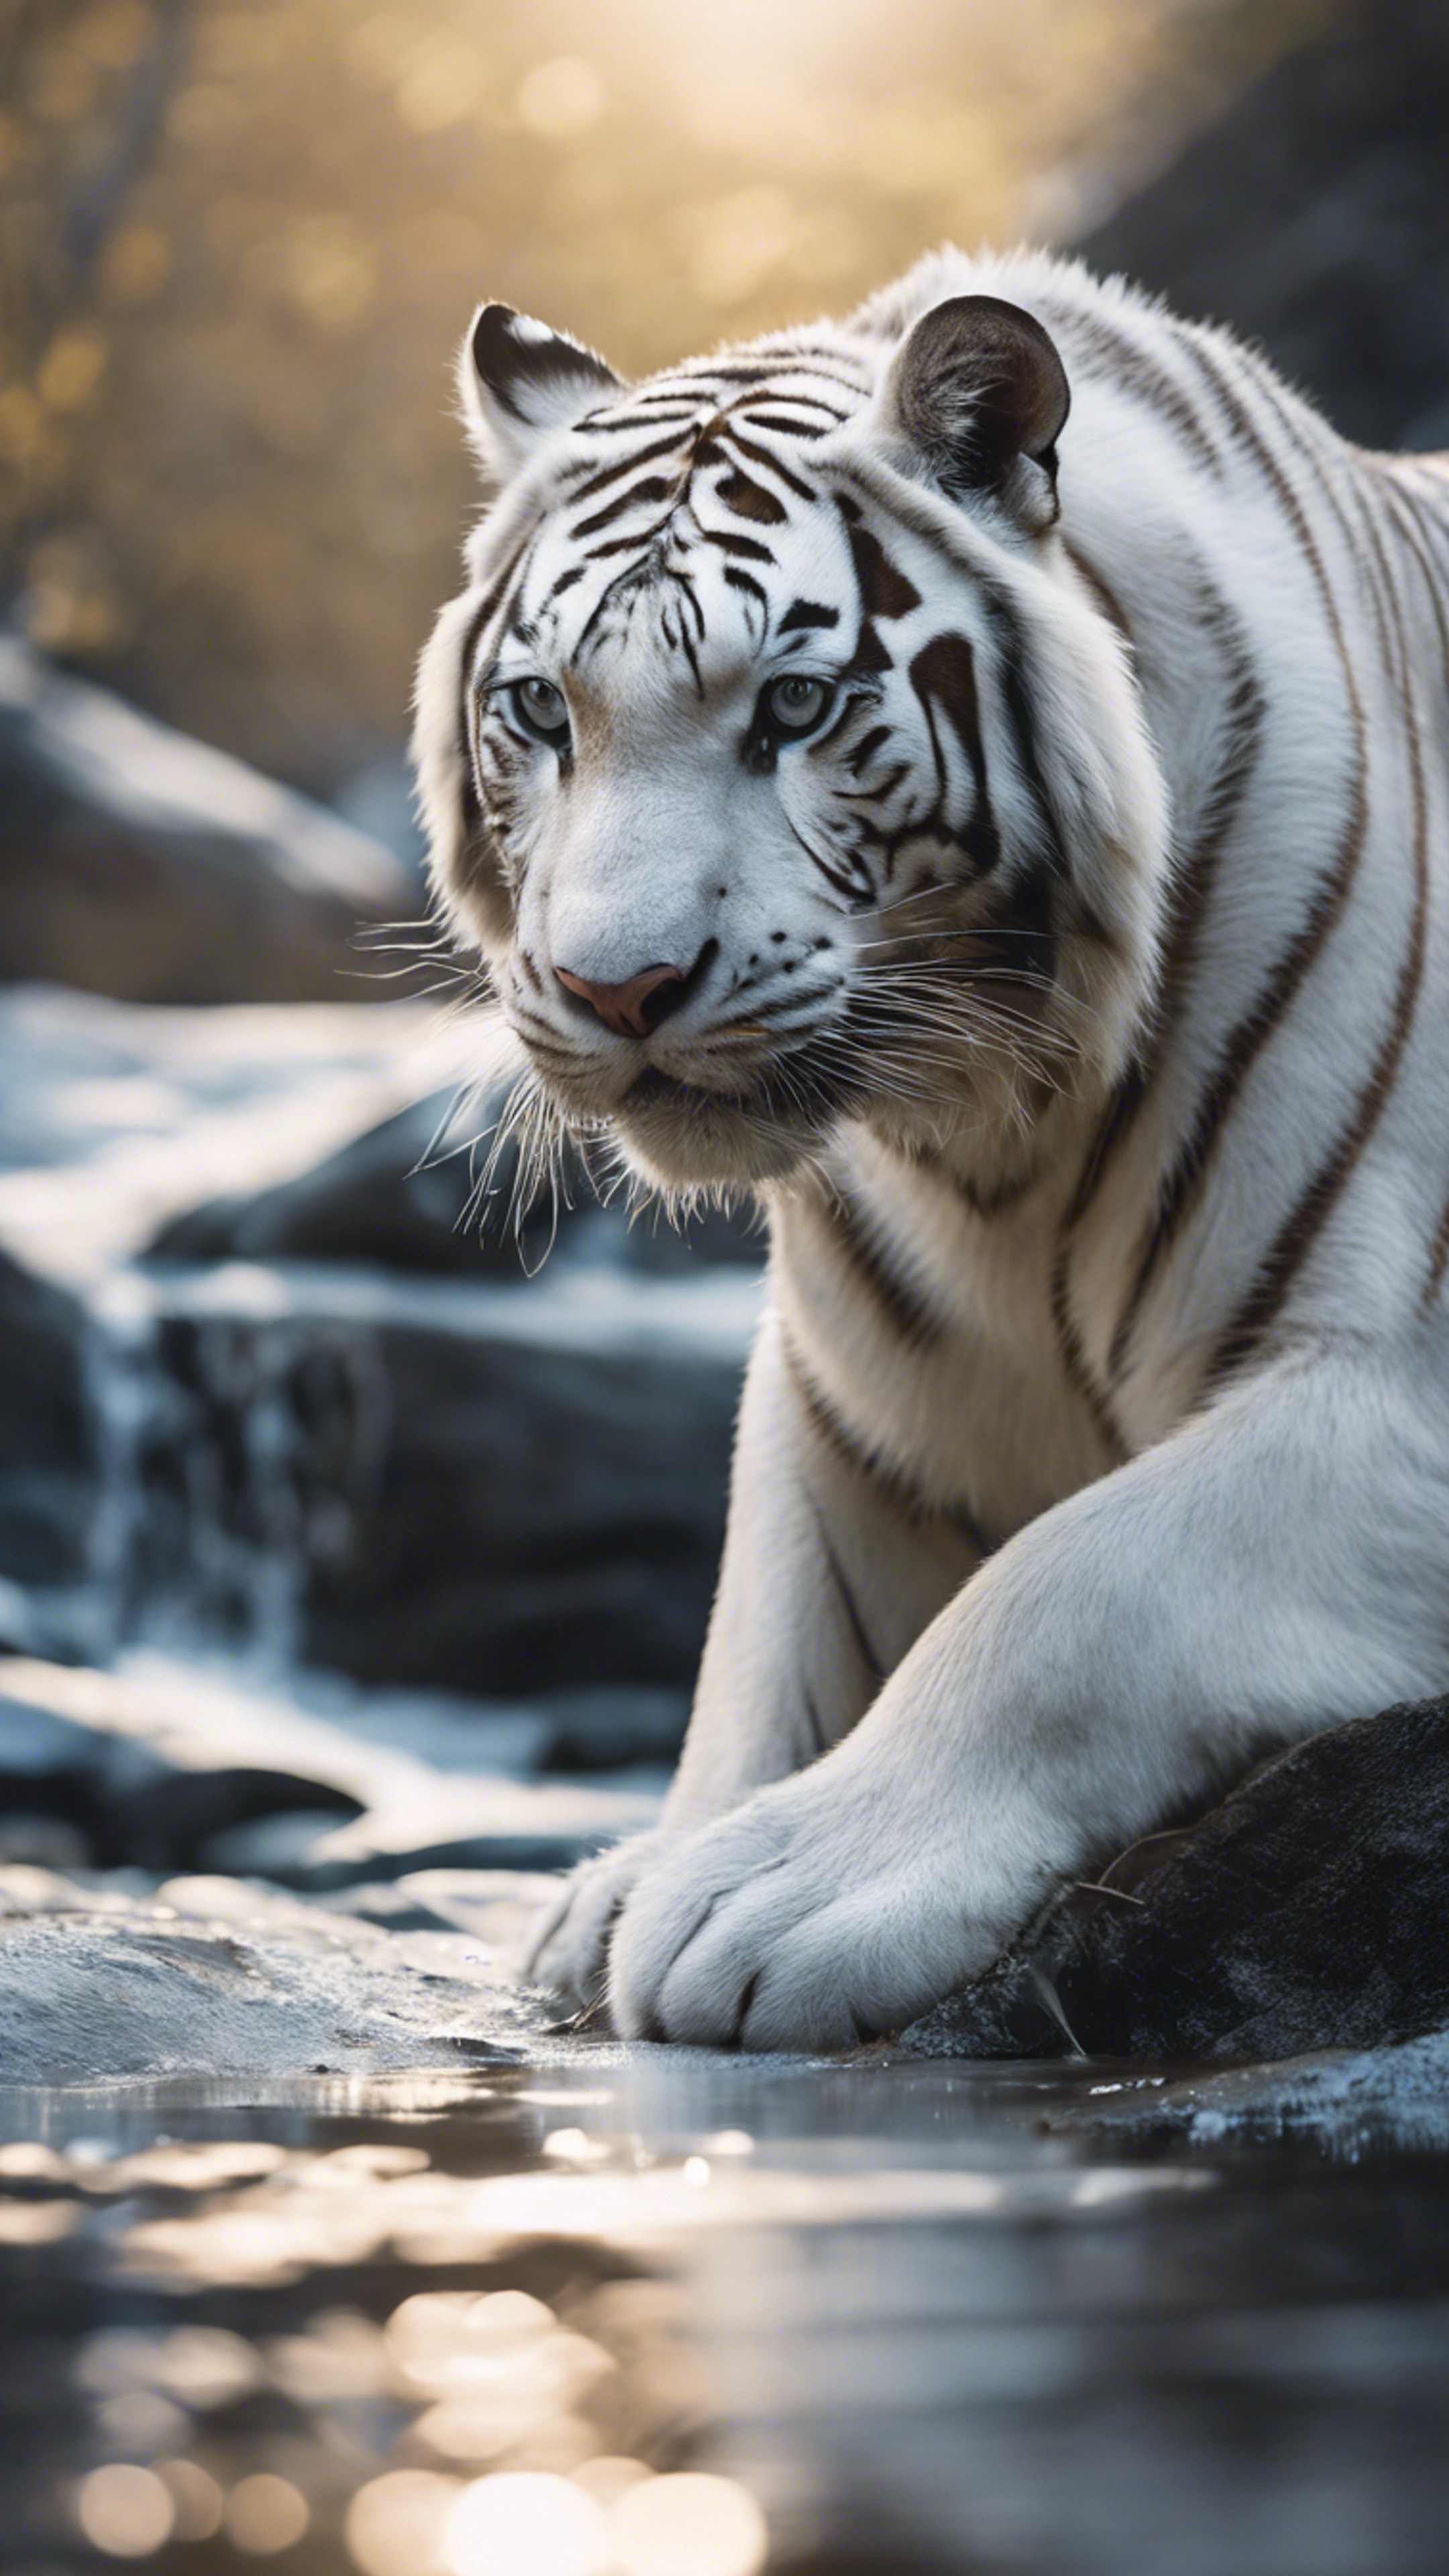 White Bengal tiger crouching near a cold mountain stream, ready to pounce Tapeta[60014ca7a56b4b479206]